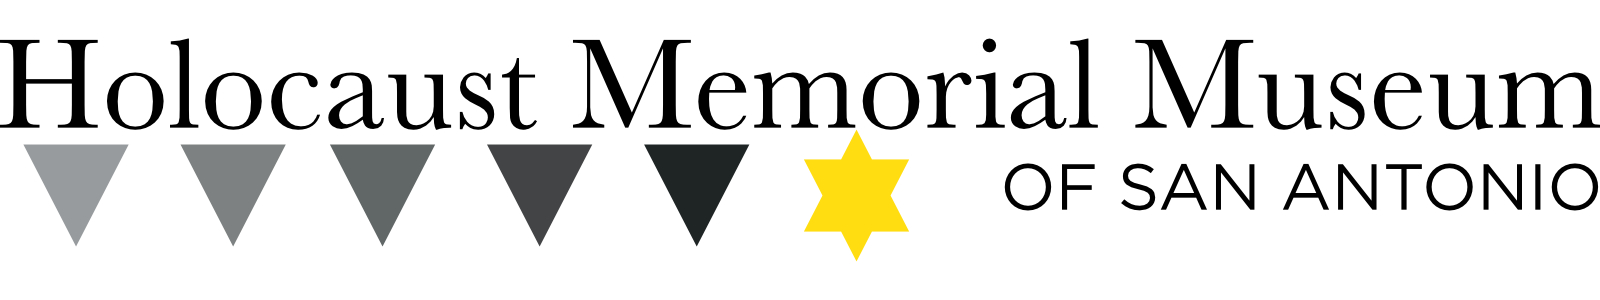 Holocaust Memorial Museum of San Antonio logo